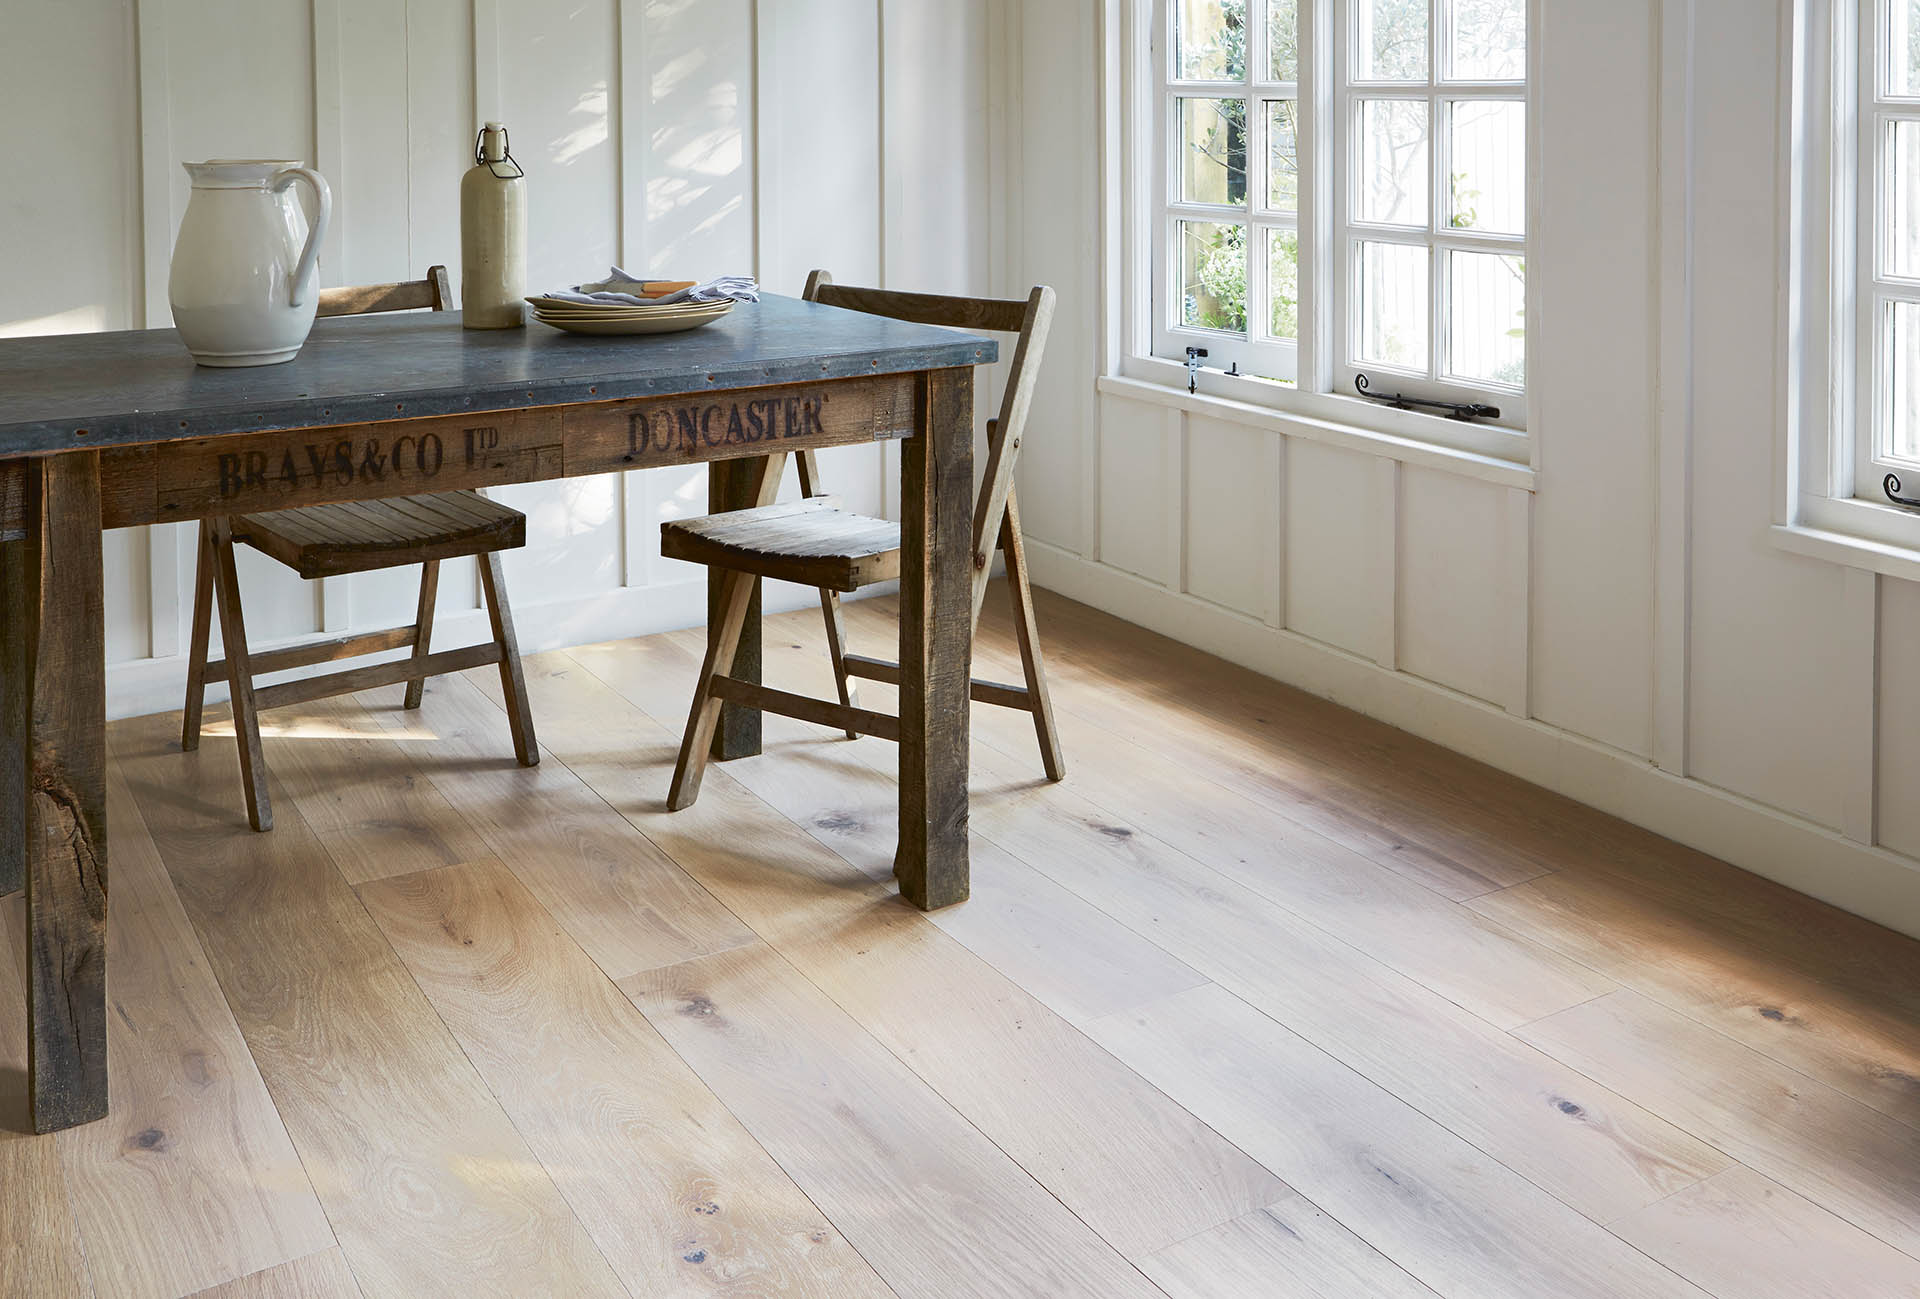 How to refinish hardwood floors Natural Wood Floor Co